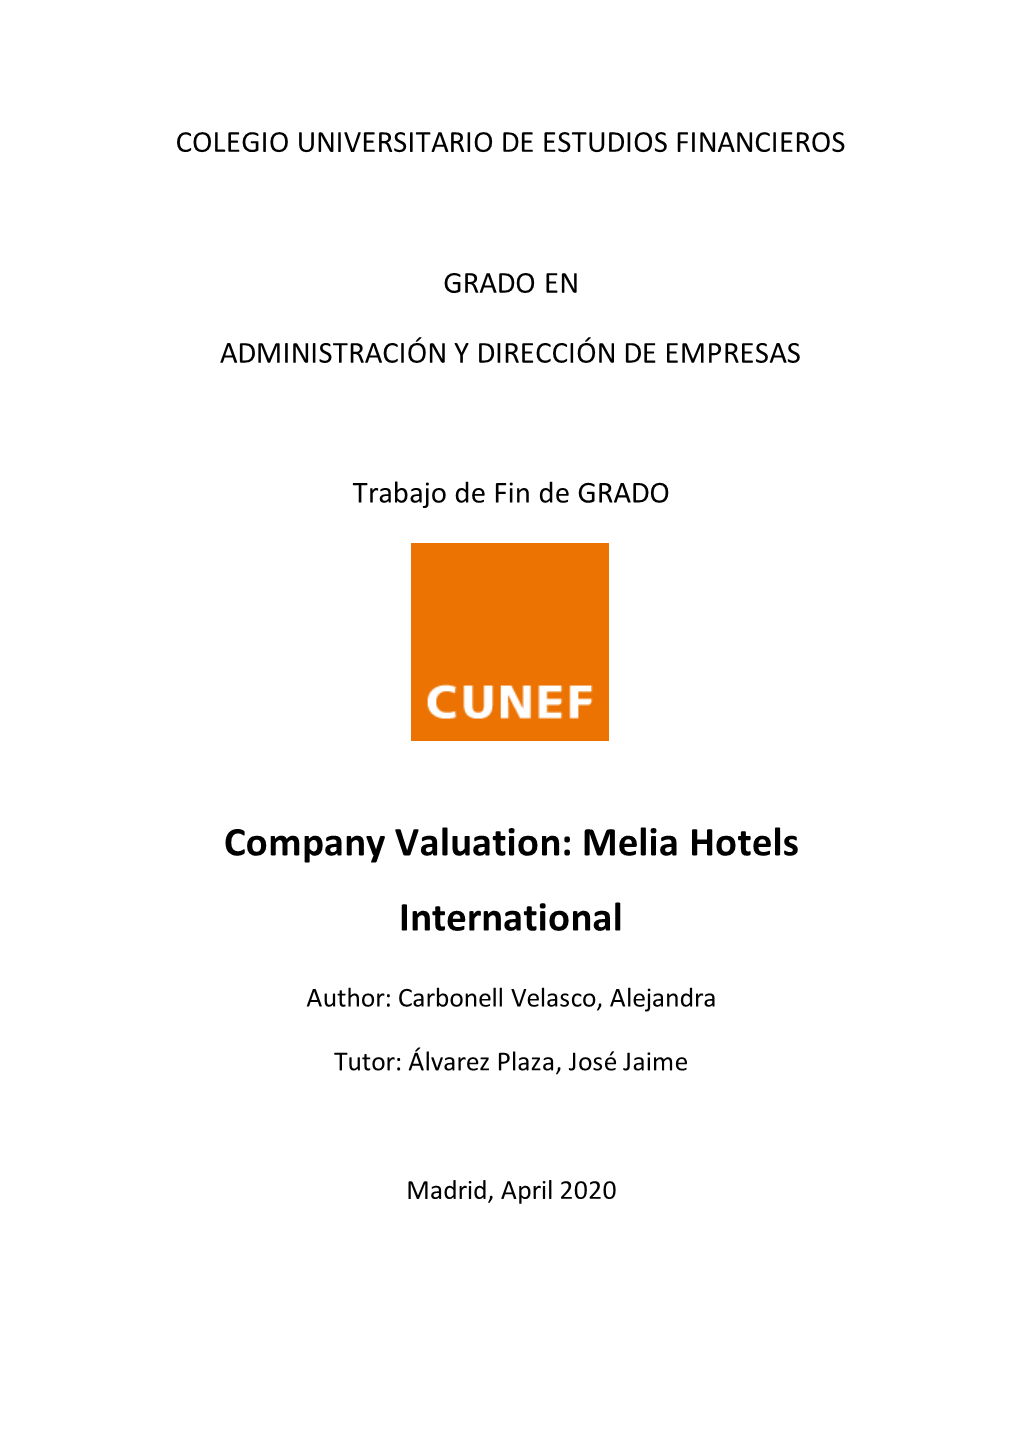 Company Valuation: Melia Hotels International